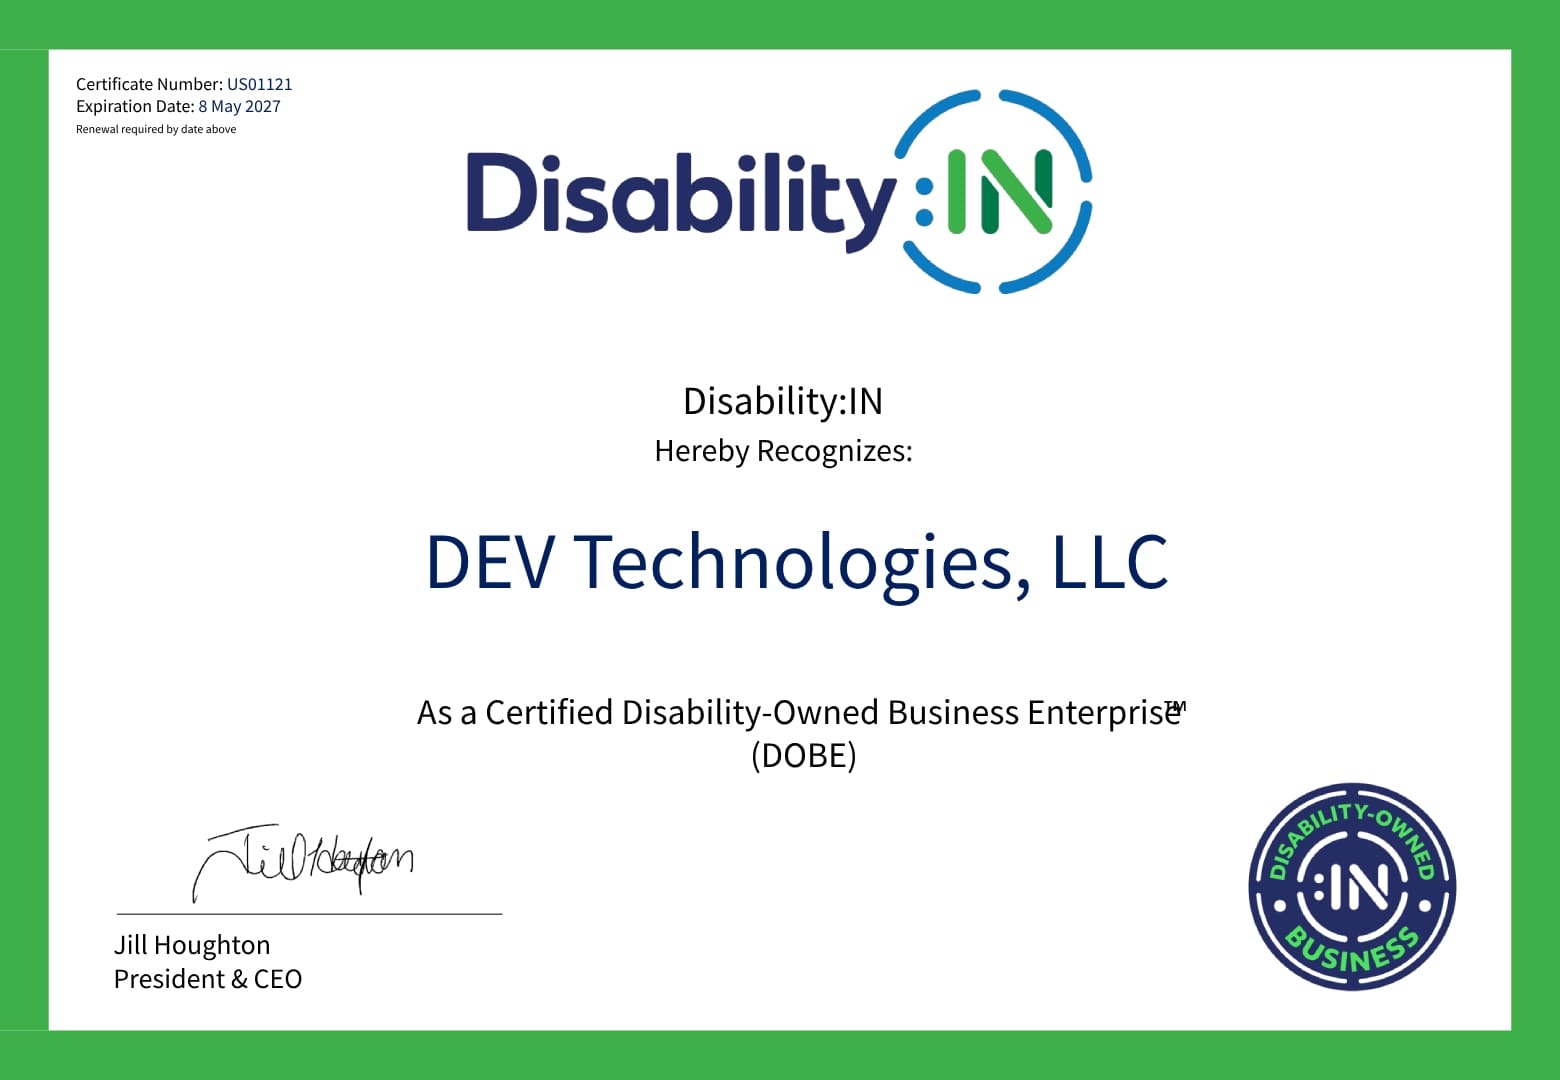 DisabilityINN - Certificate for DOBE certifica-pdf